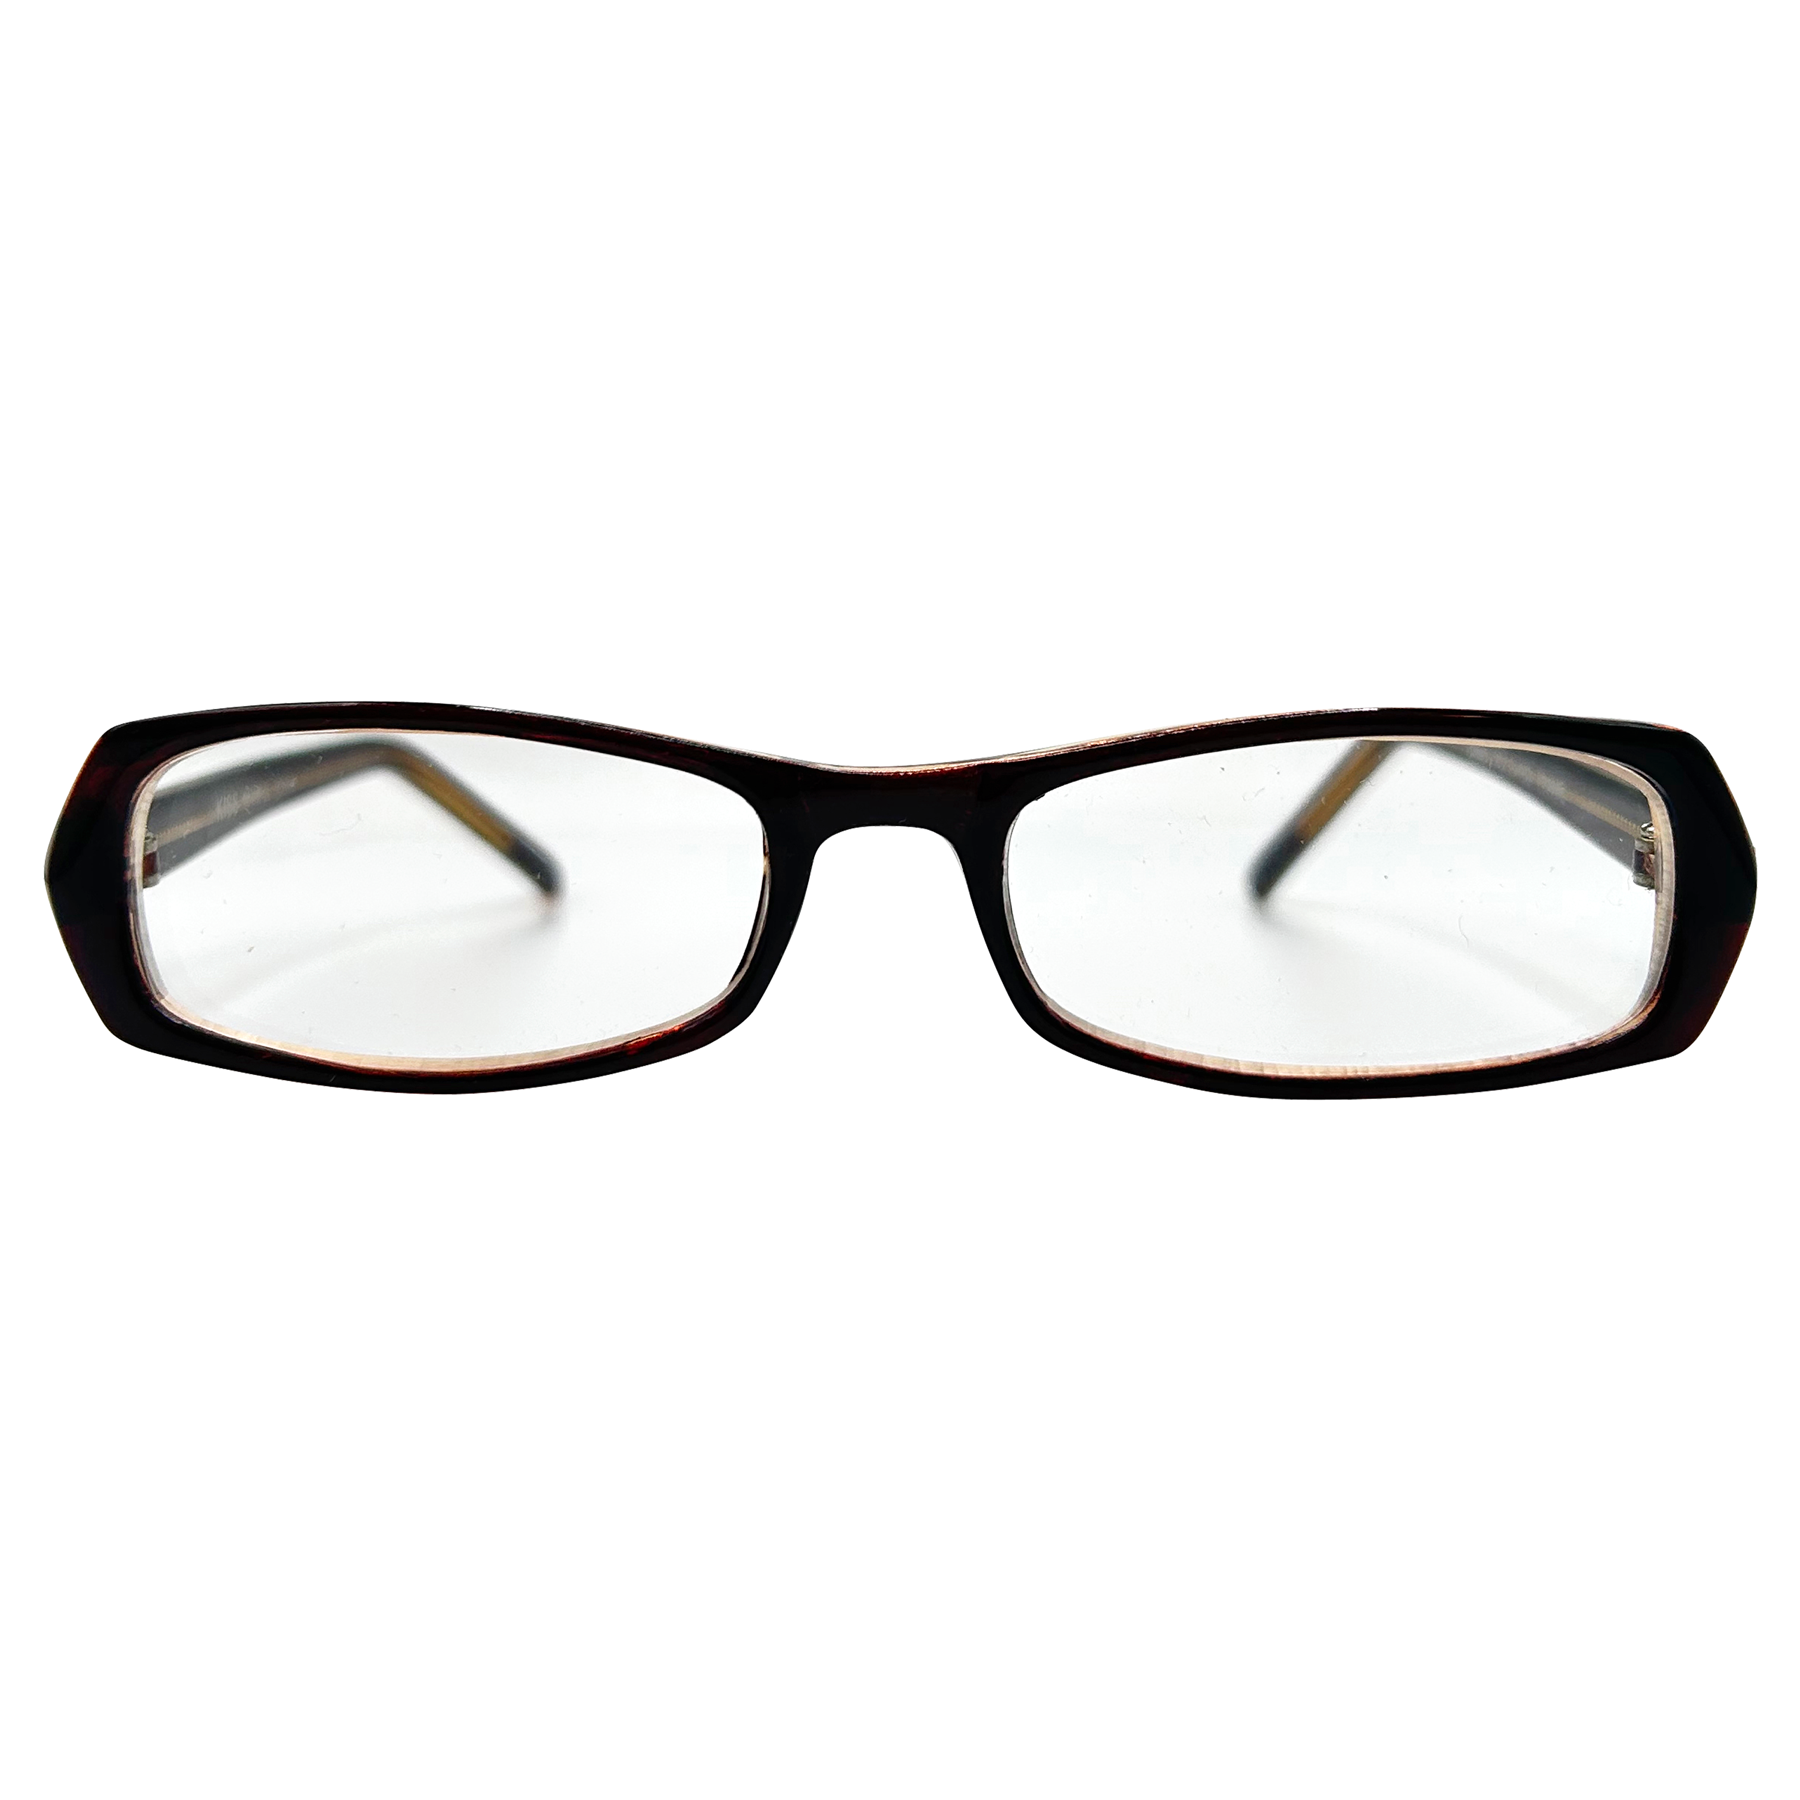 PEP TALK Slim Clear 90s Glasses